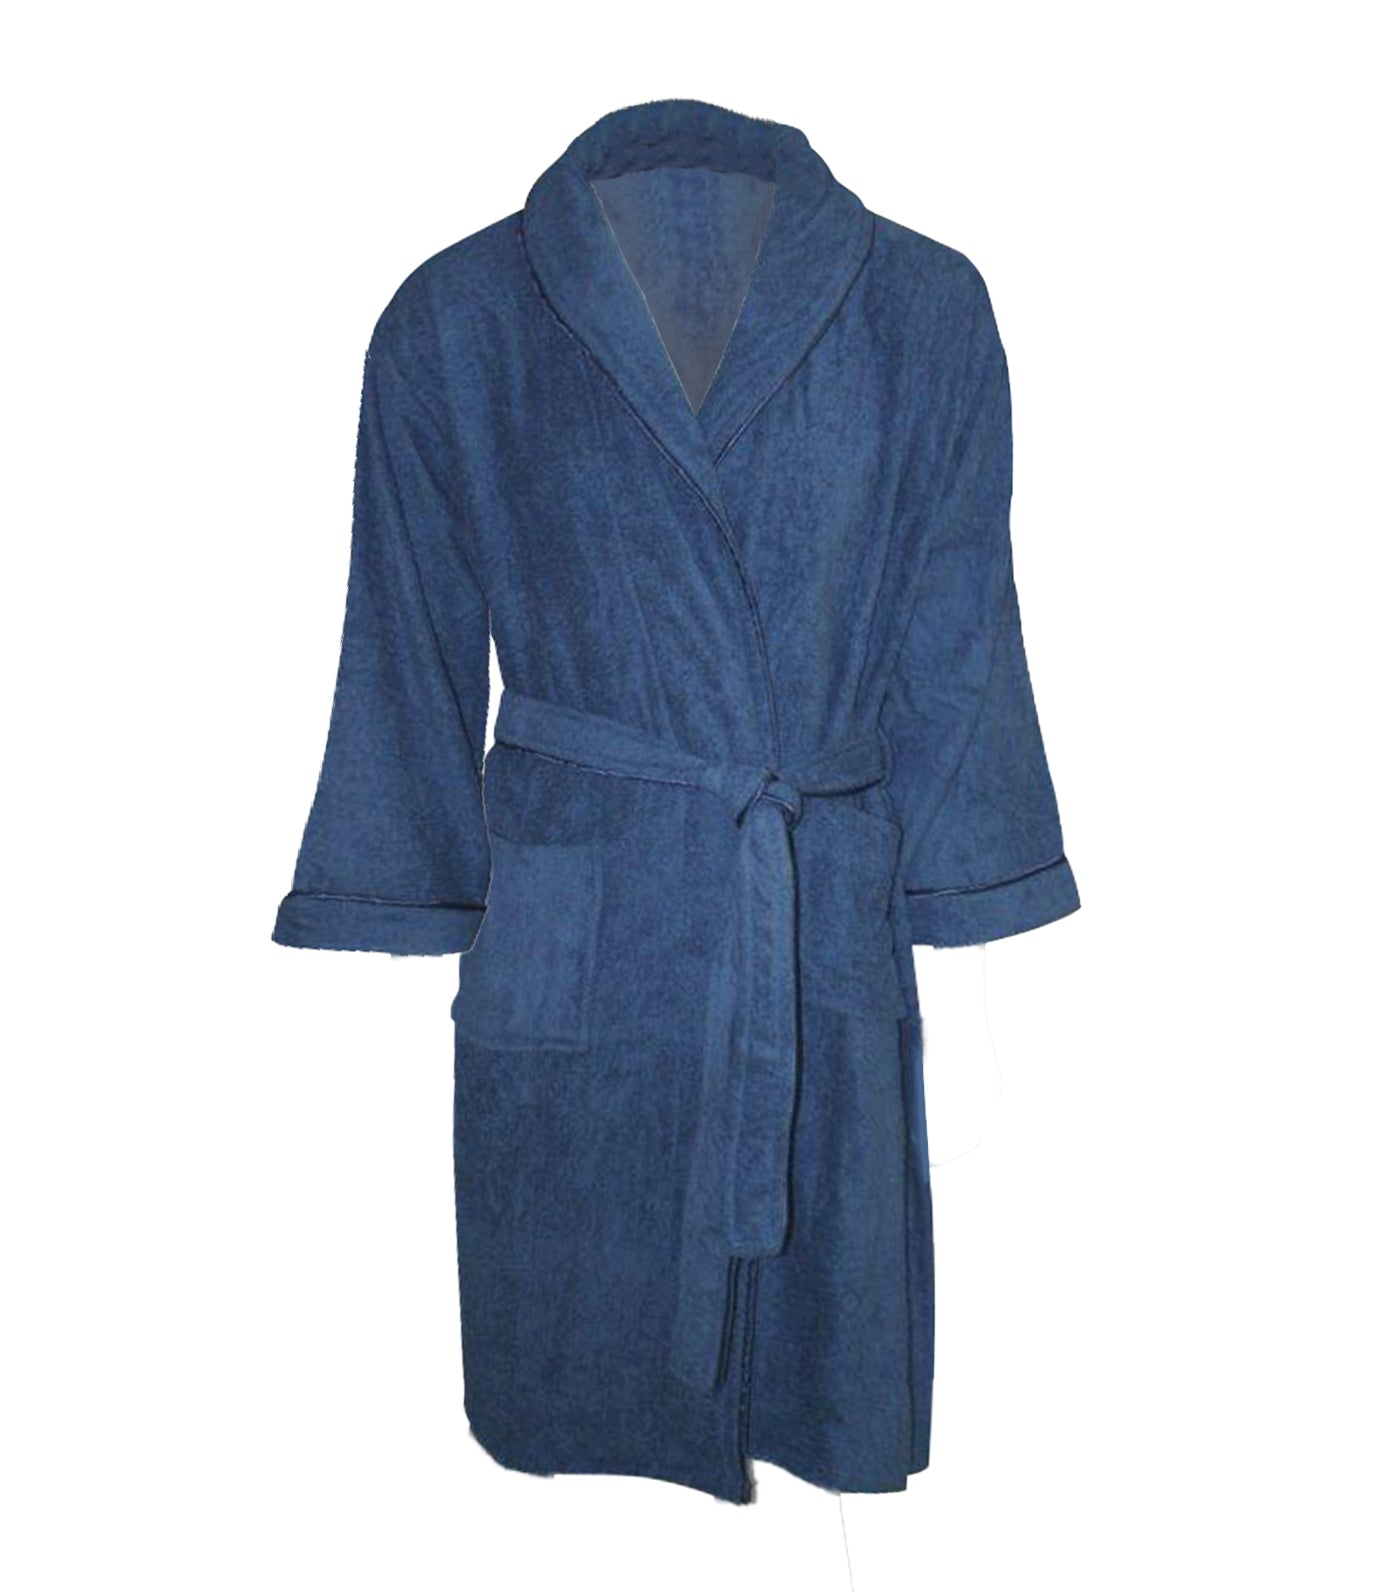 bloomsfield terry bathrobe - blue